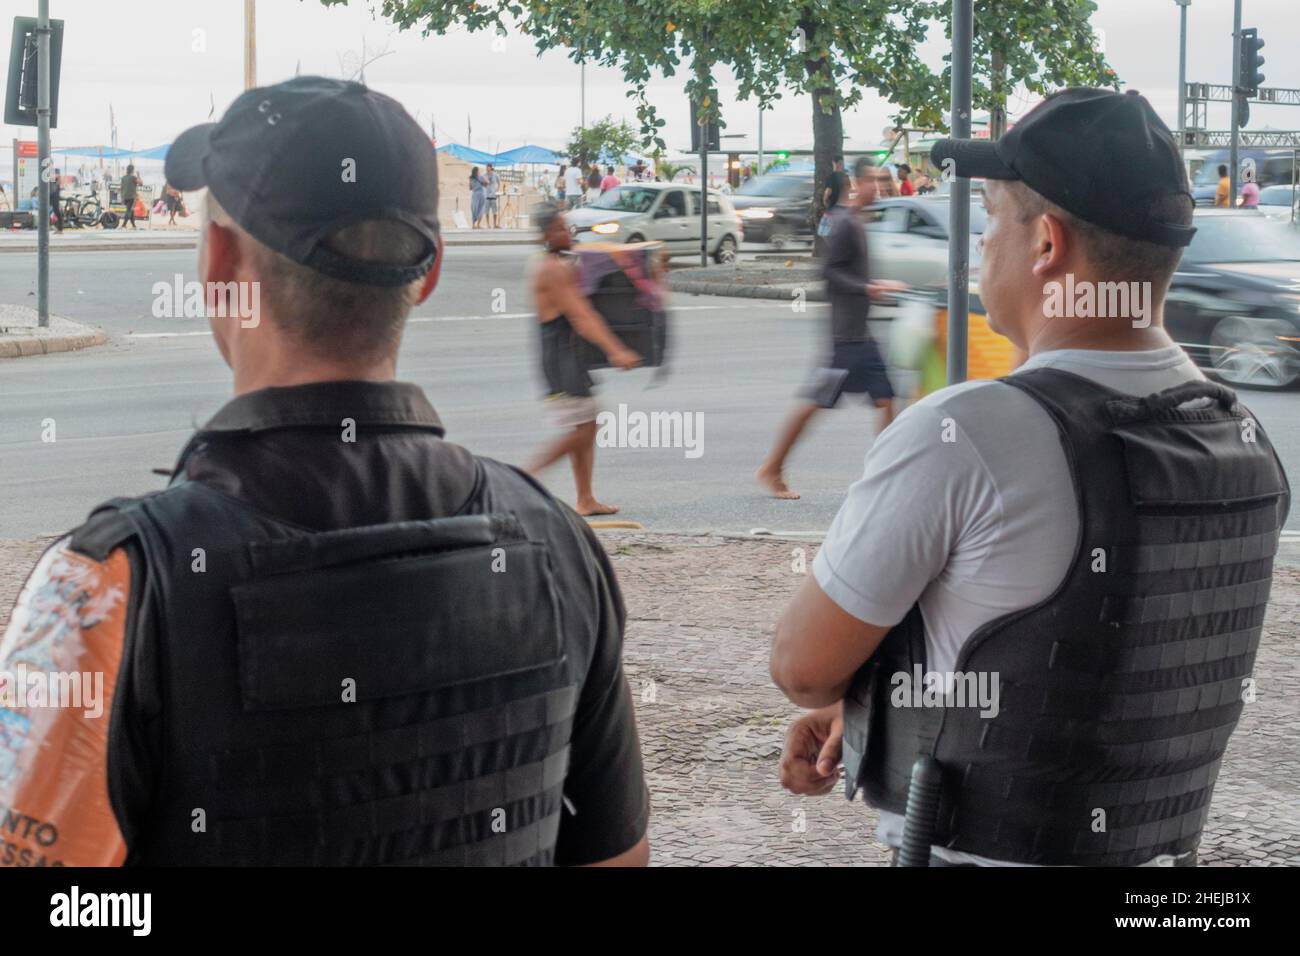 South America, Rio de Janeiro. Policemen wearing kevlar bullet proof vests, on the beat in Copacabana Stock Photo